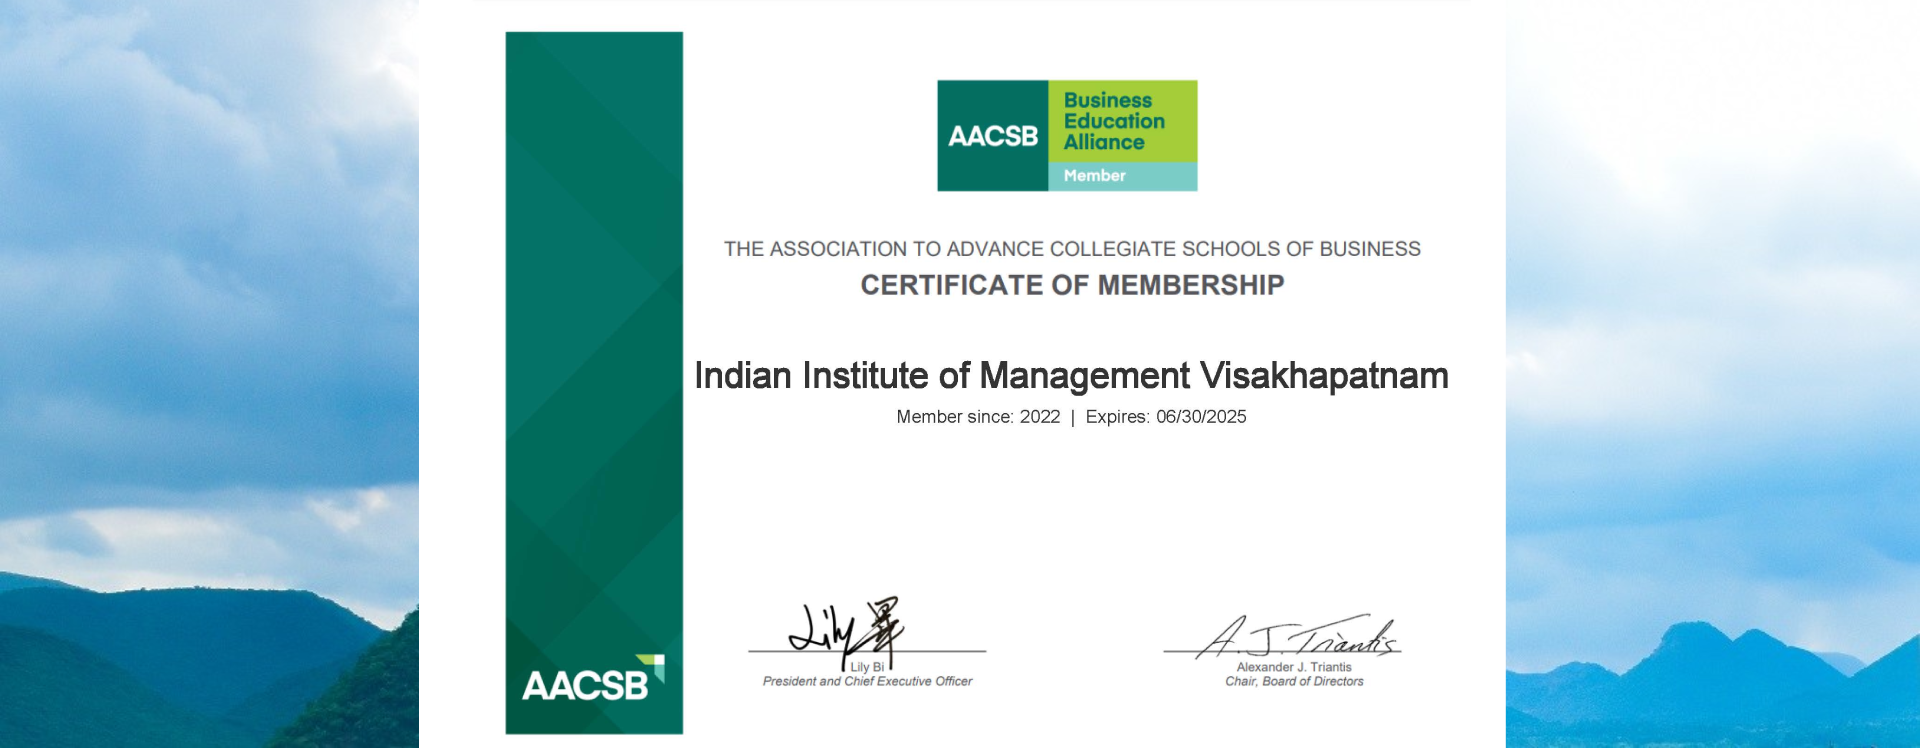 AACSB Certificate of Membership